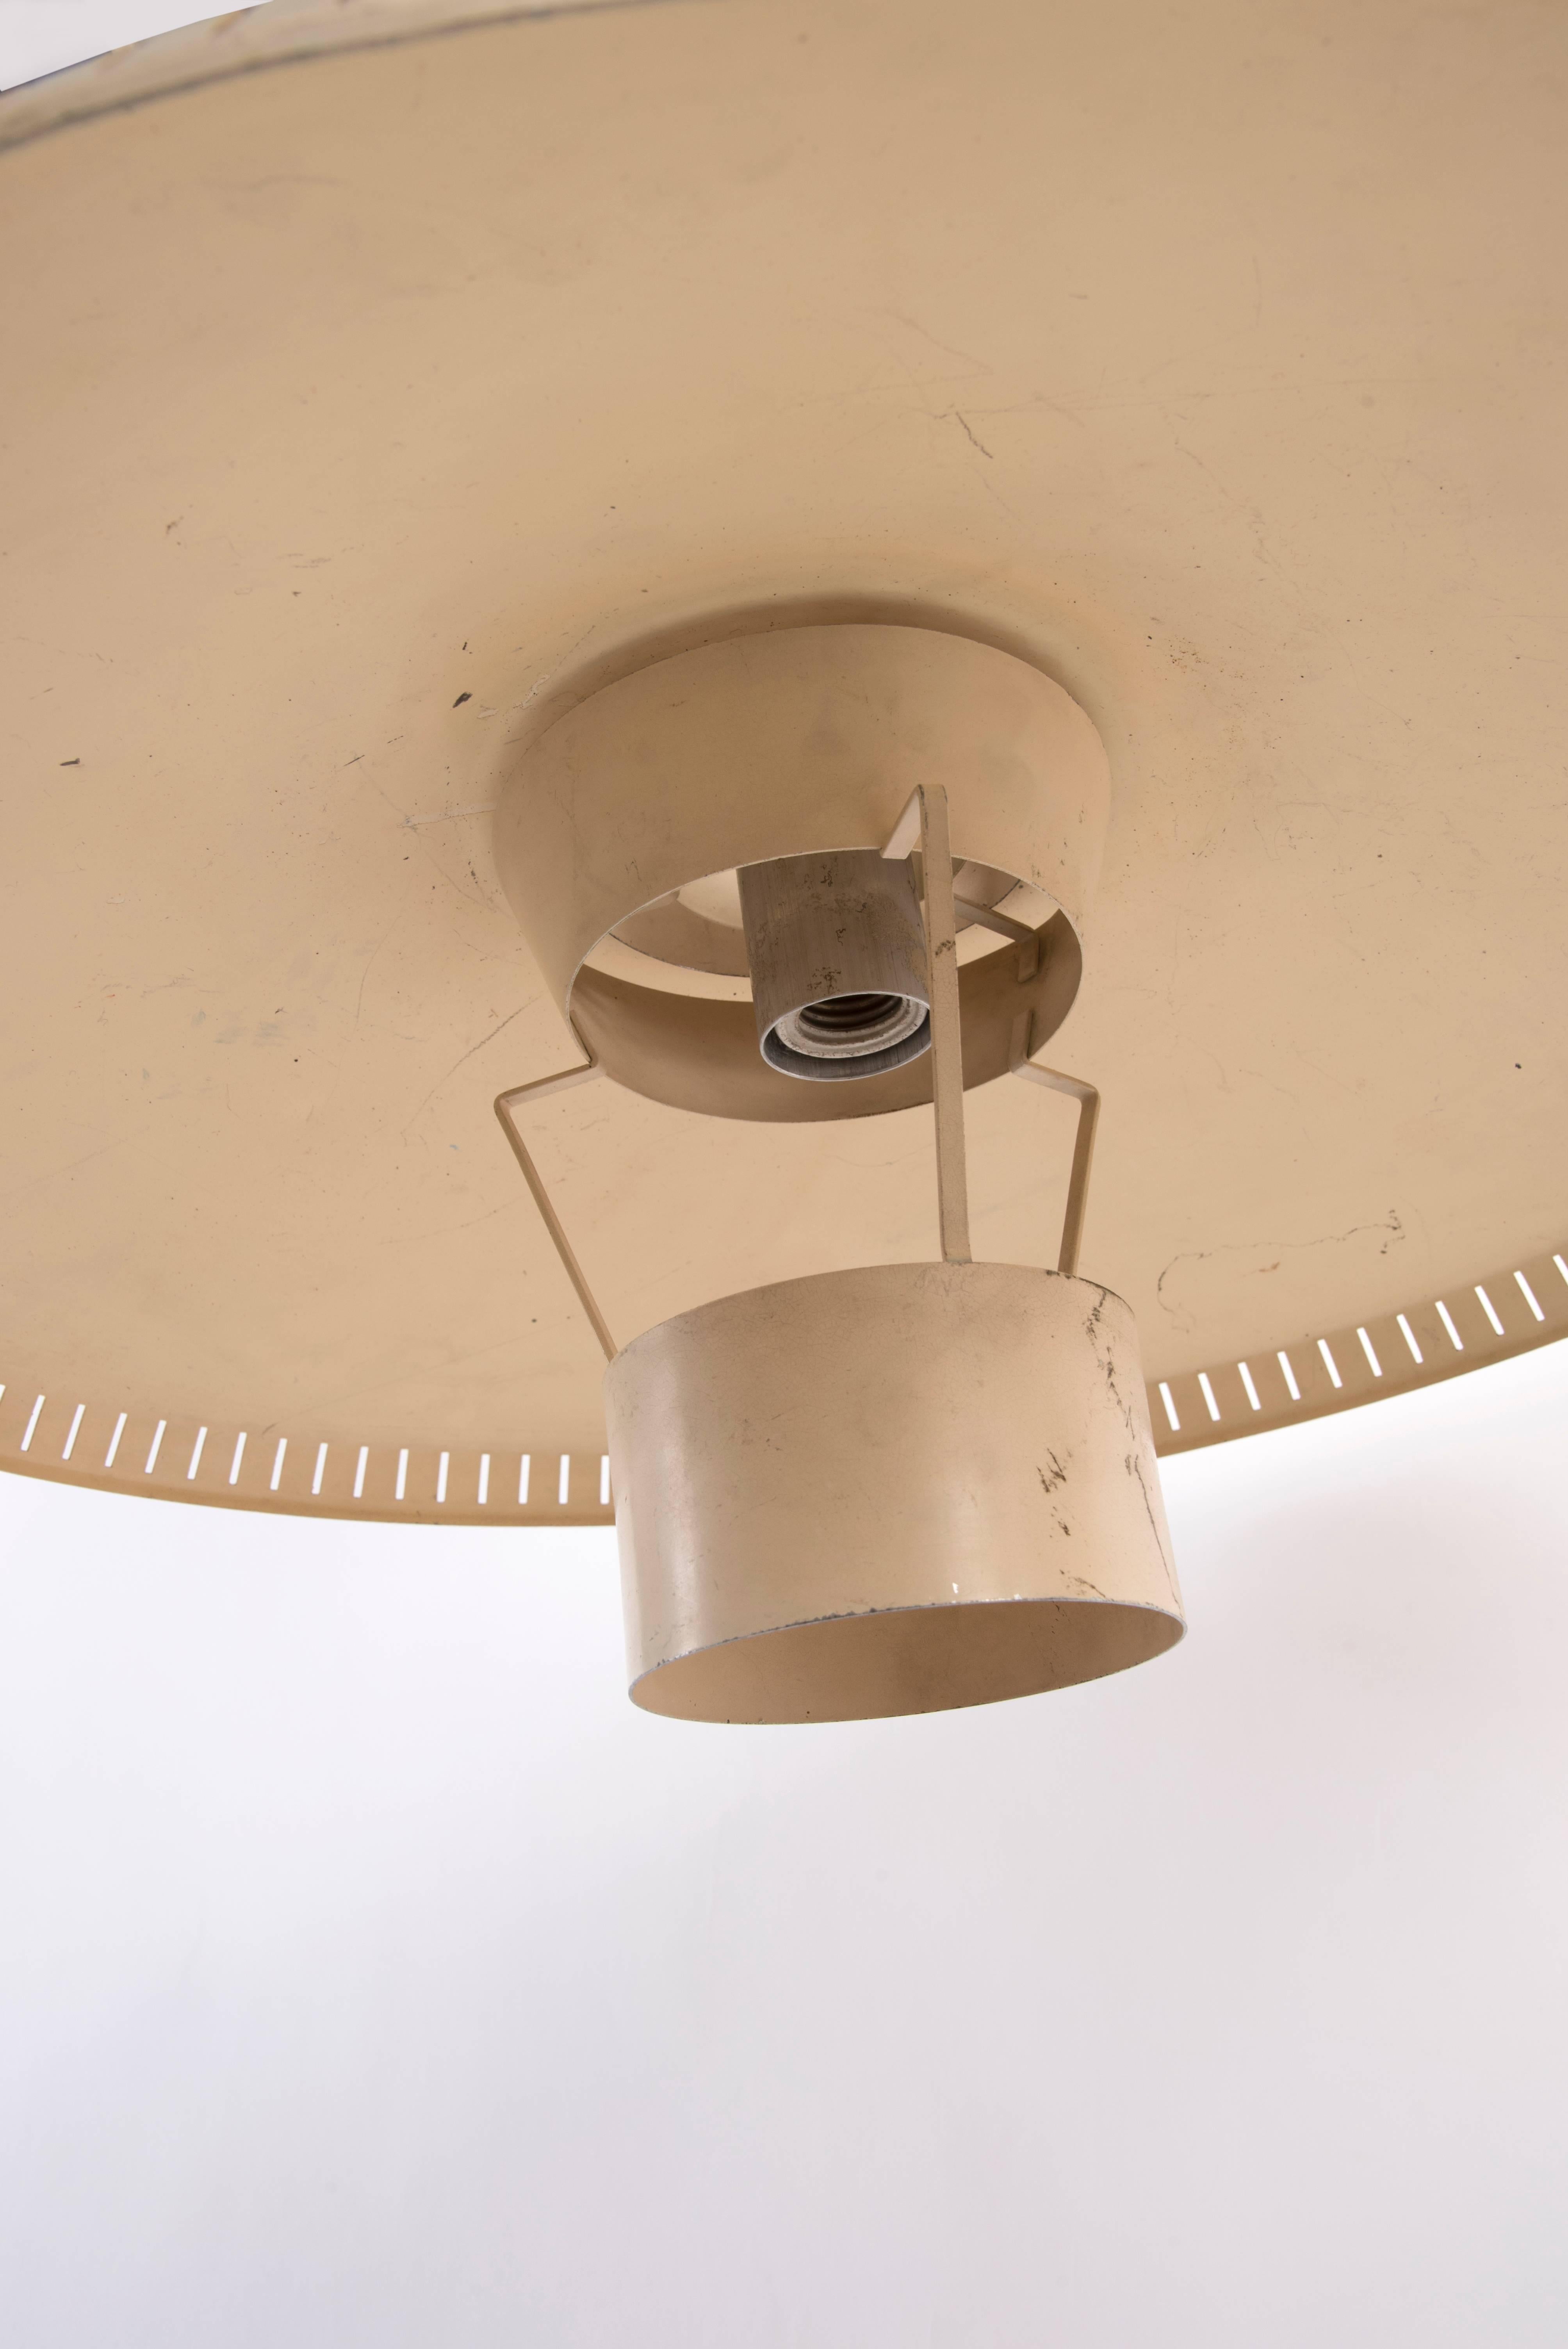 Lacquered Stilnovo, Sliding Hanging Lamp, Original Stilnovo Label, Italy, circa 1950